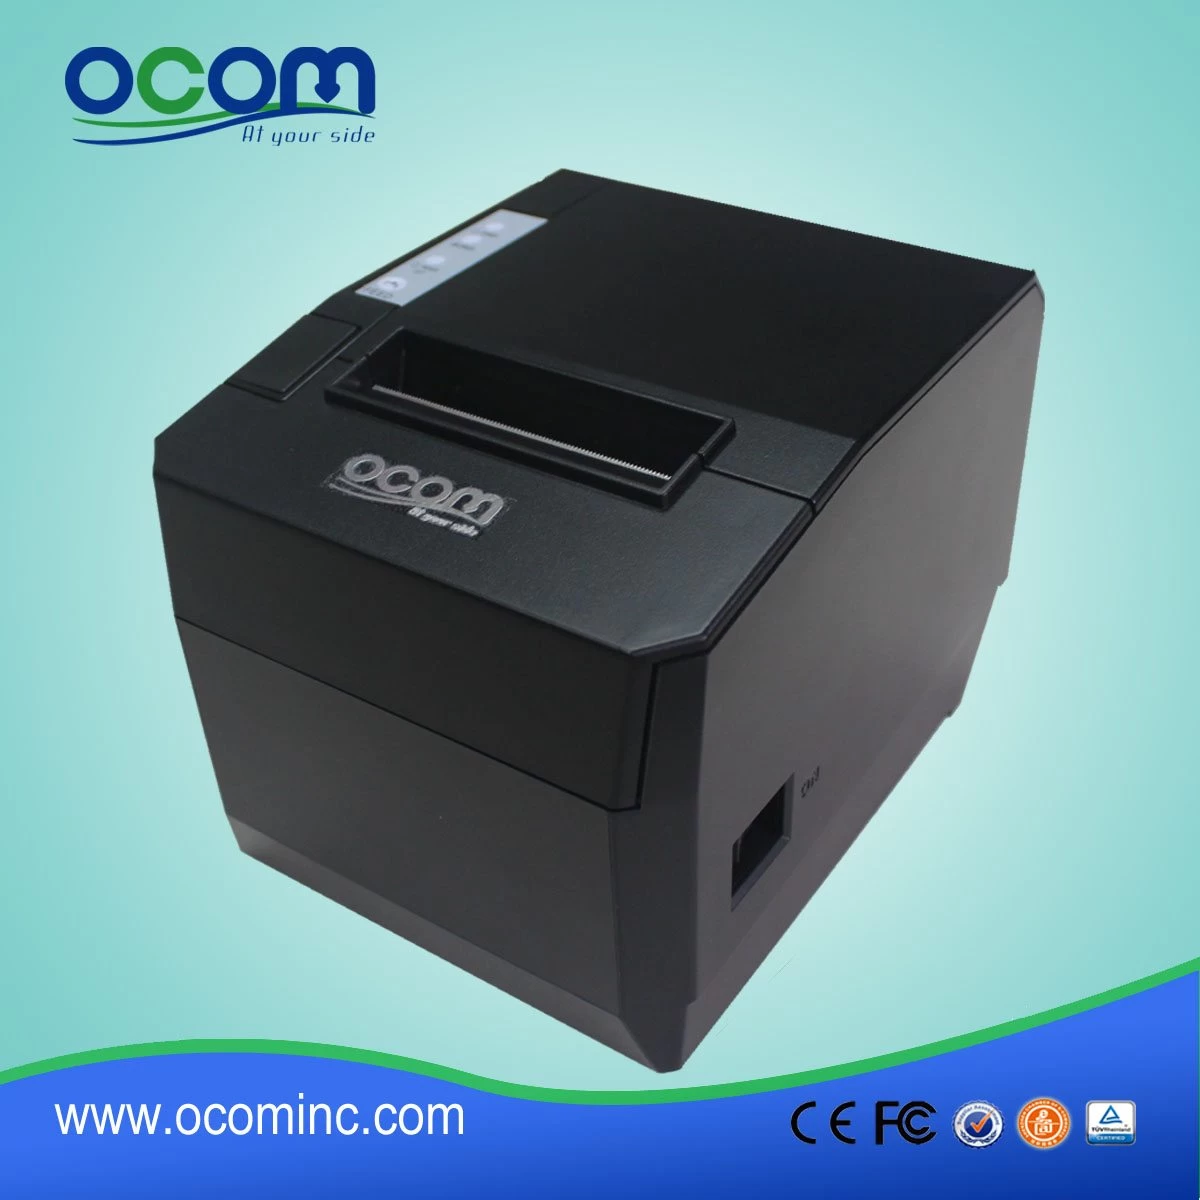 Re: 80mm desktop bluetooth POS receipt printer-OCPP-88A-BUL